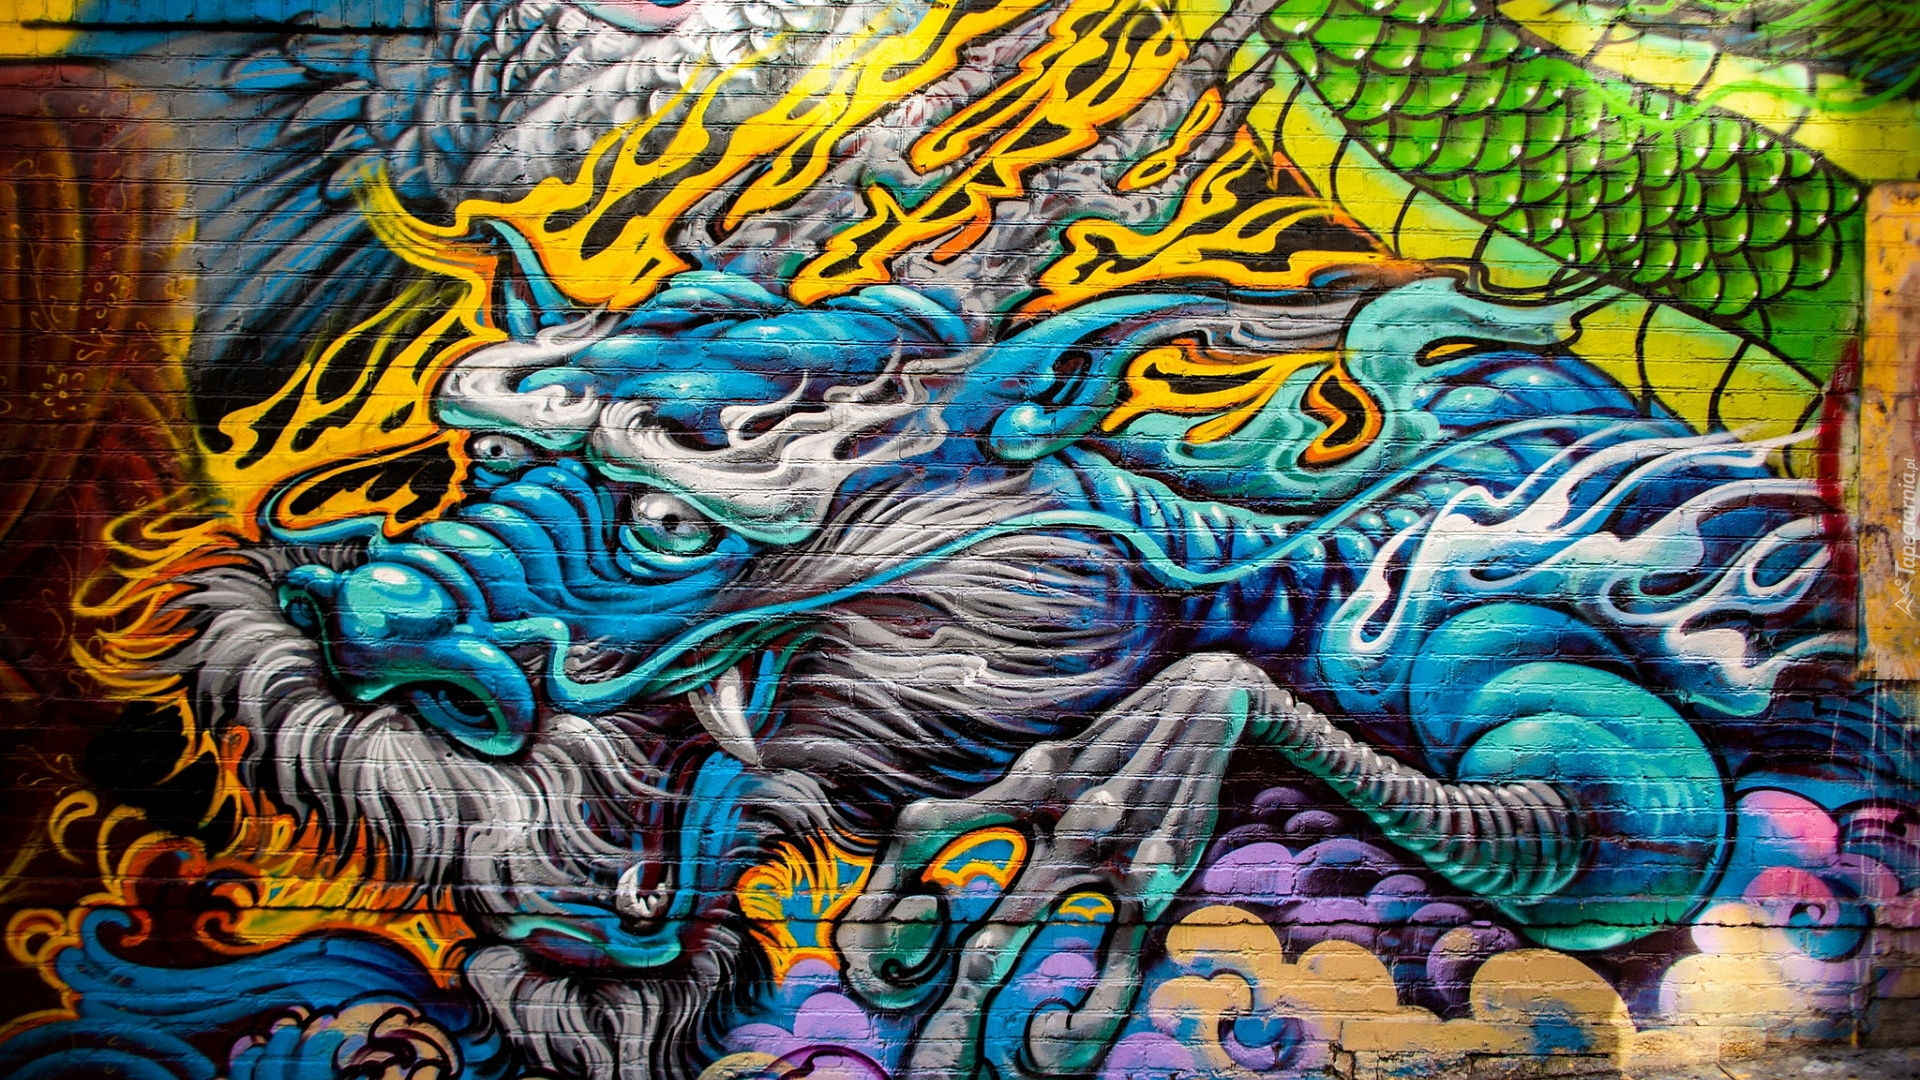 Ściana, Smok, Street art